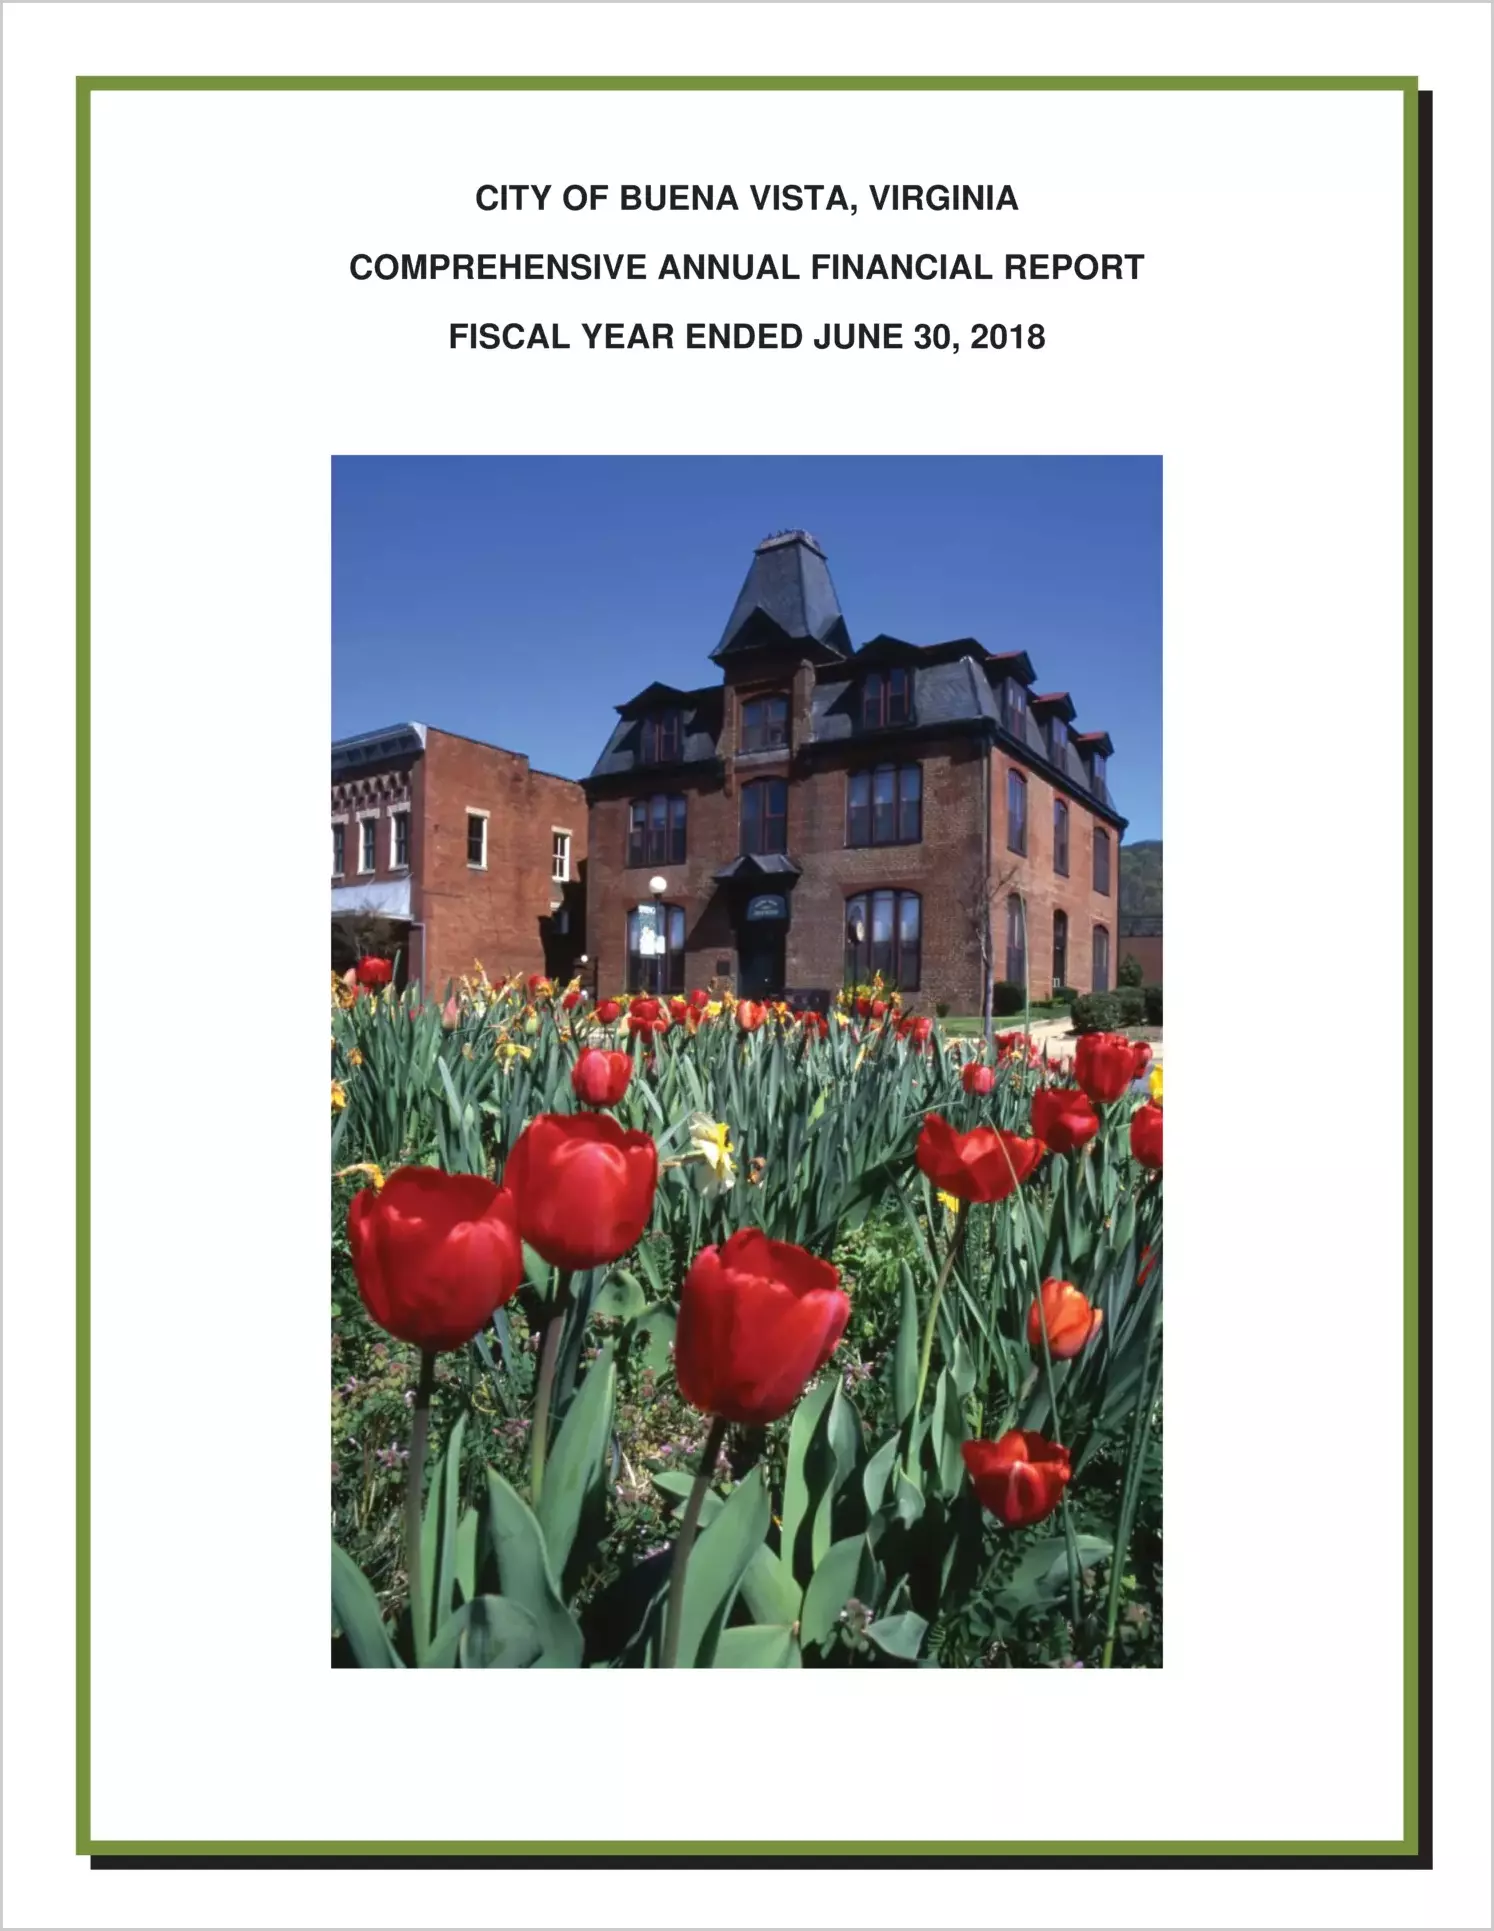 2018 Annual Financial Report for City of Buena Vista